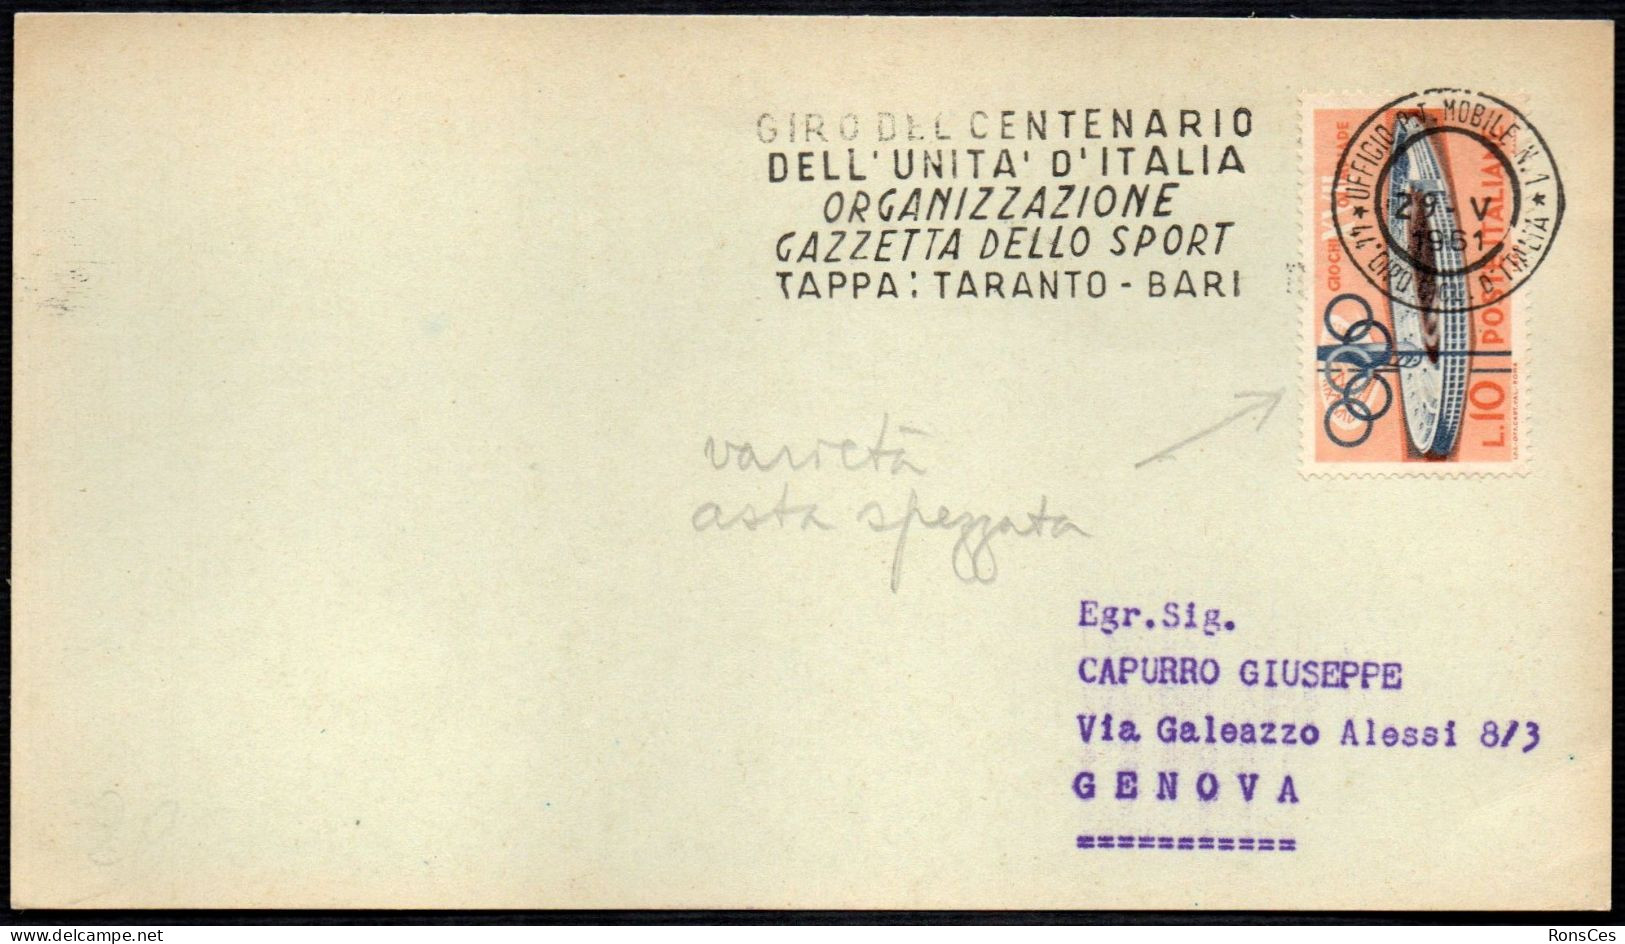 CYCLING - ITALIA 29.05.1961 GIRO DEL CENTENARIO DELL'UNITA' D'ITALIA - GAZZETTA SPORT - TARANTO / BARI - VARIETA' - A - Cycling